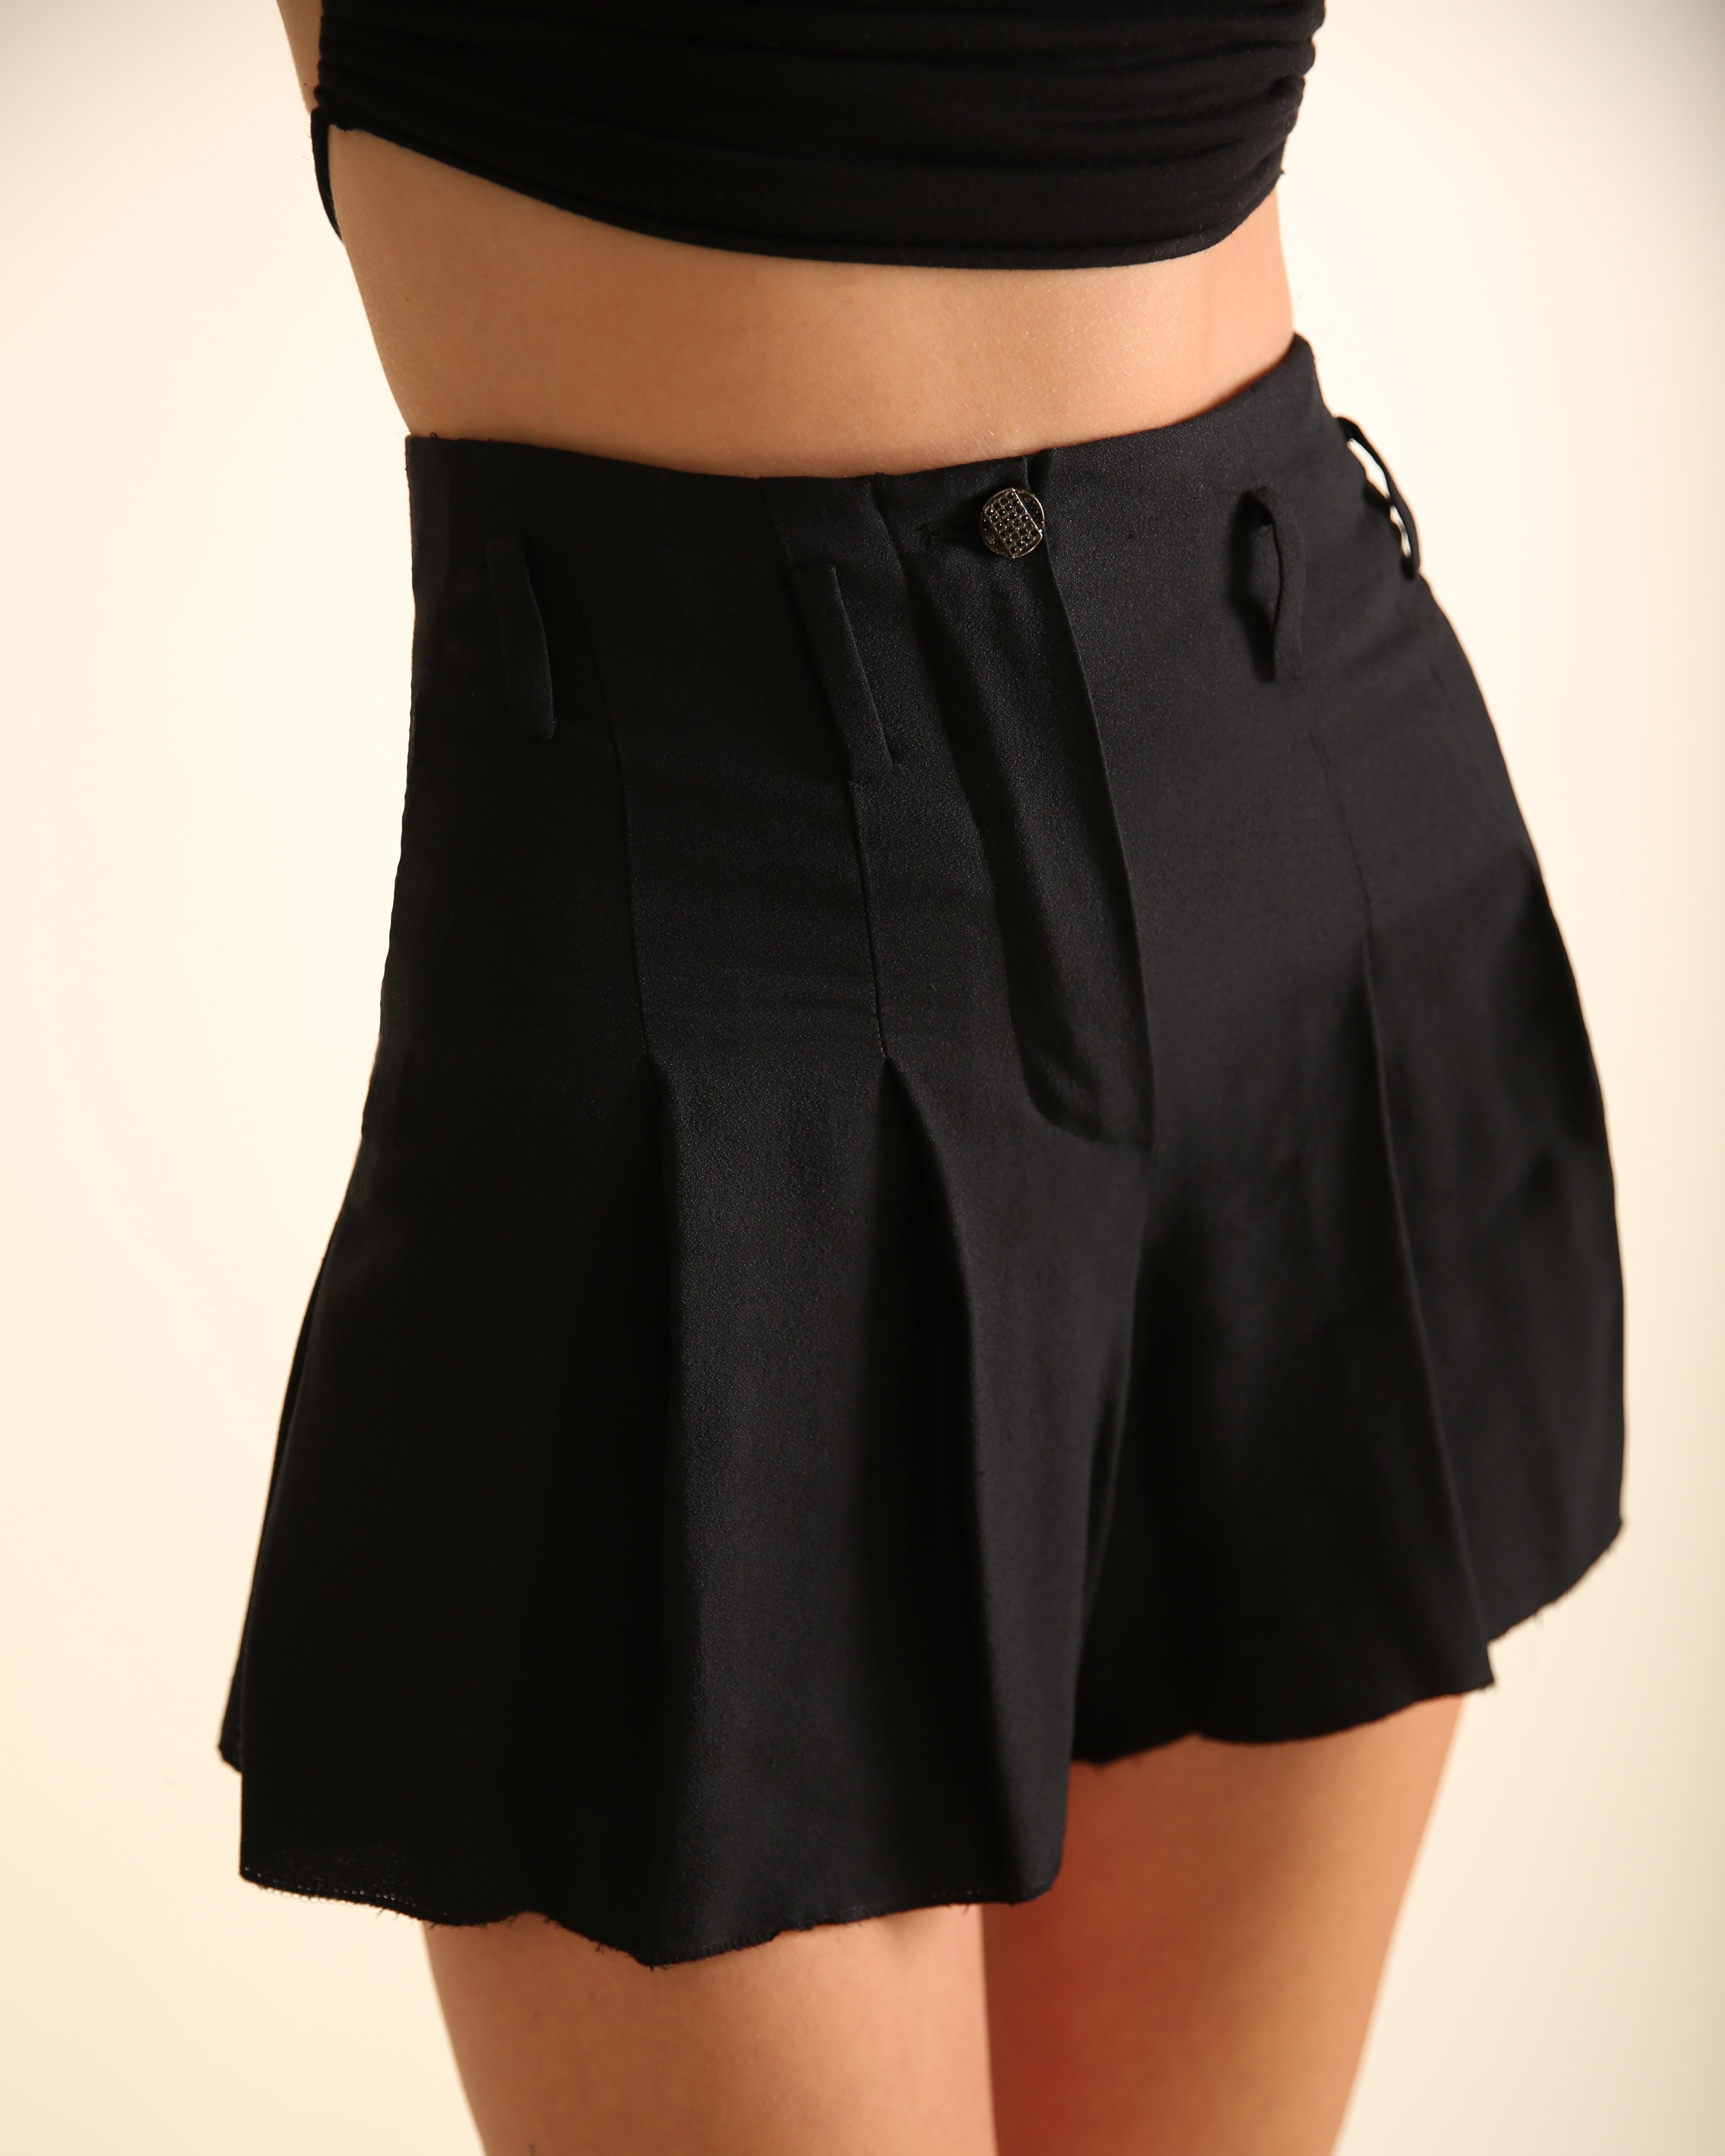 Orange Chanel vintage black high waisted pleated mini skirt shorts dress skort 34